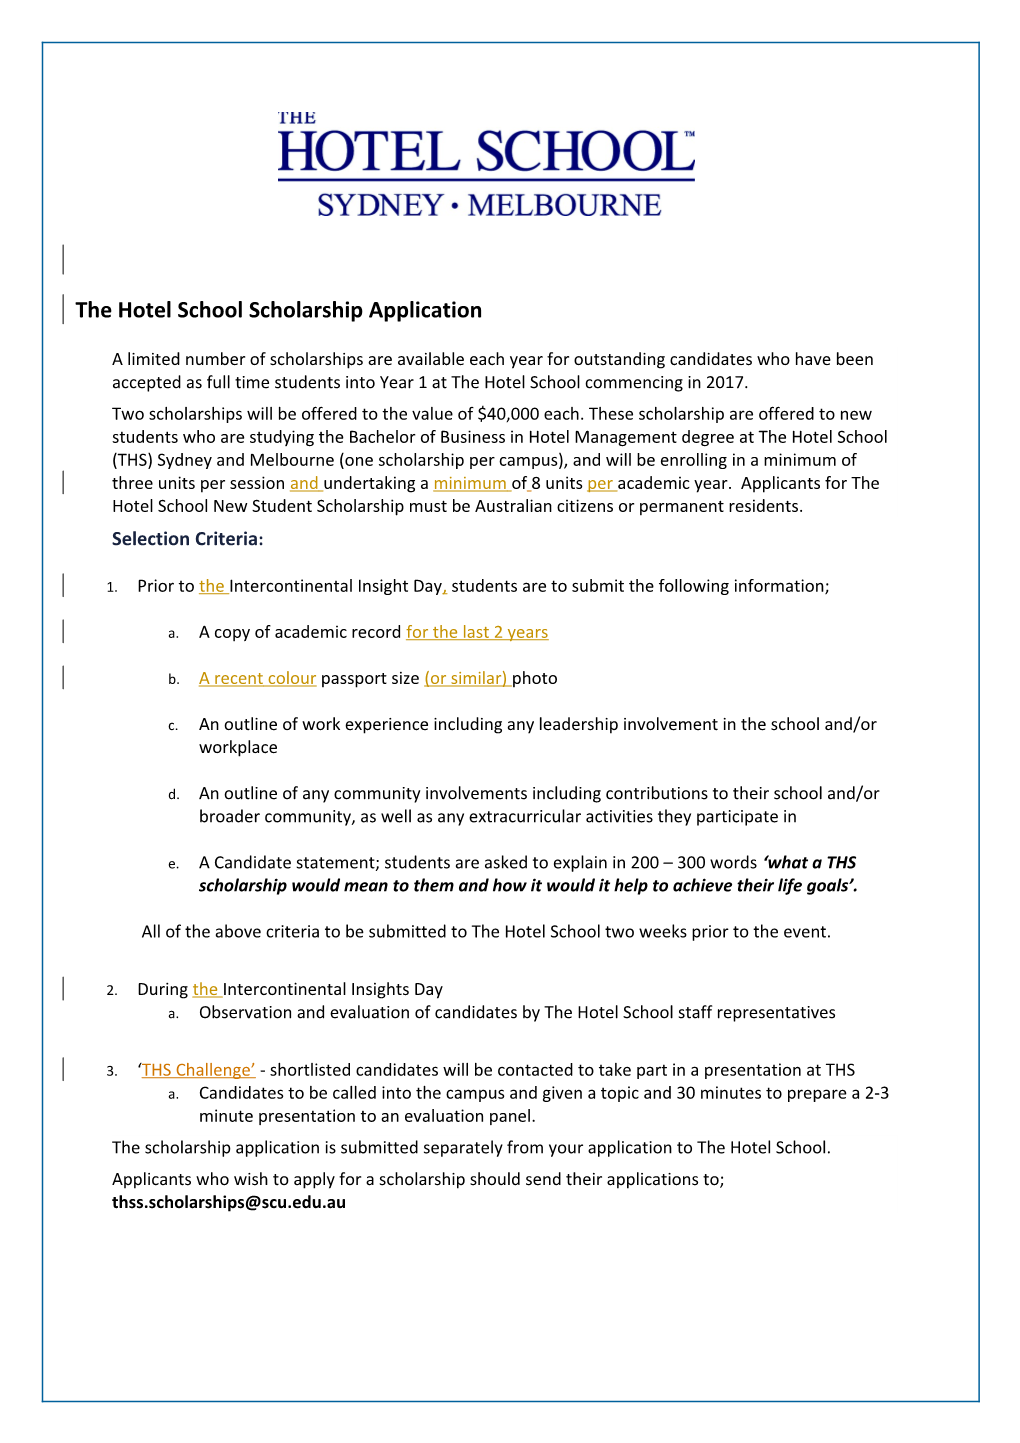 The Hotel School Scholarship Application